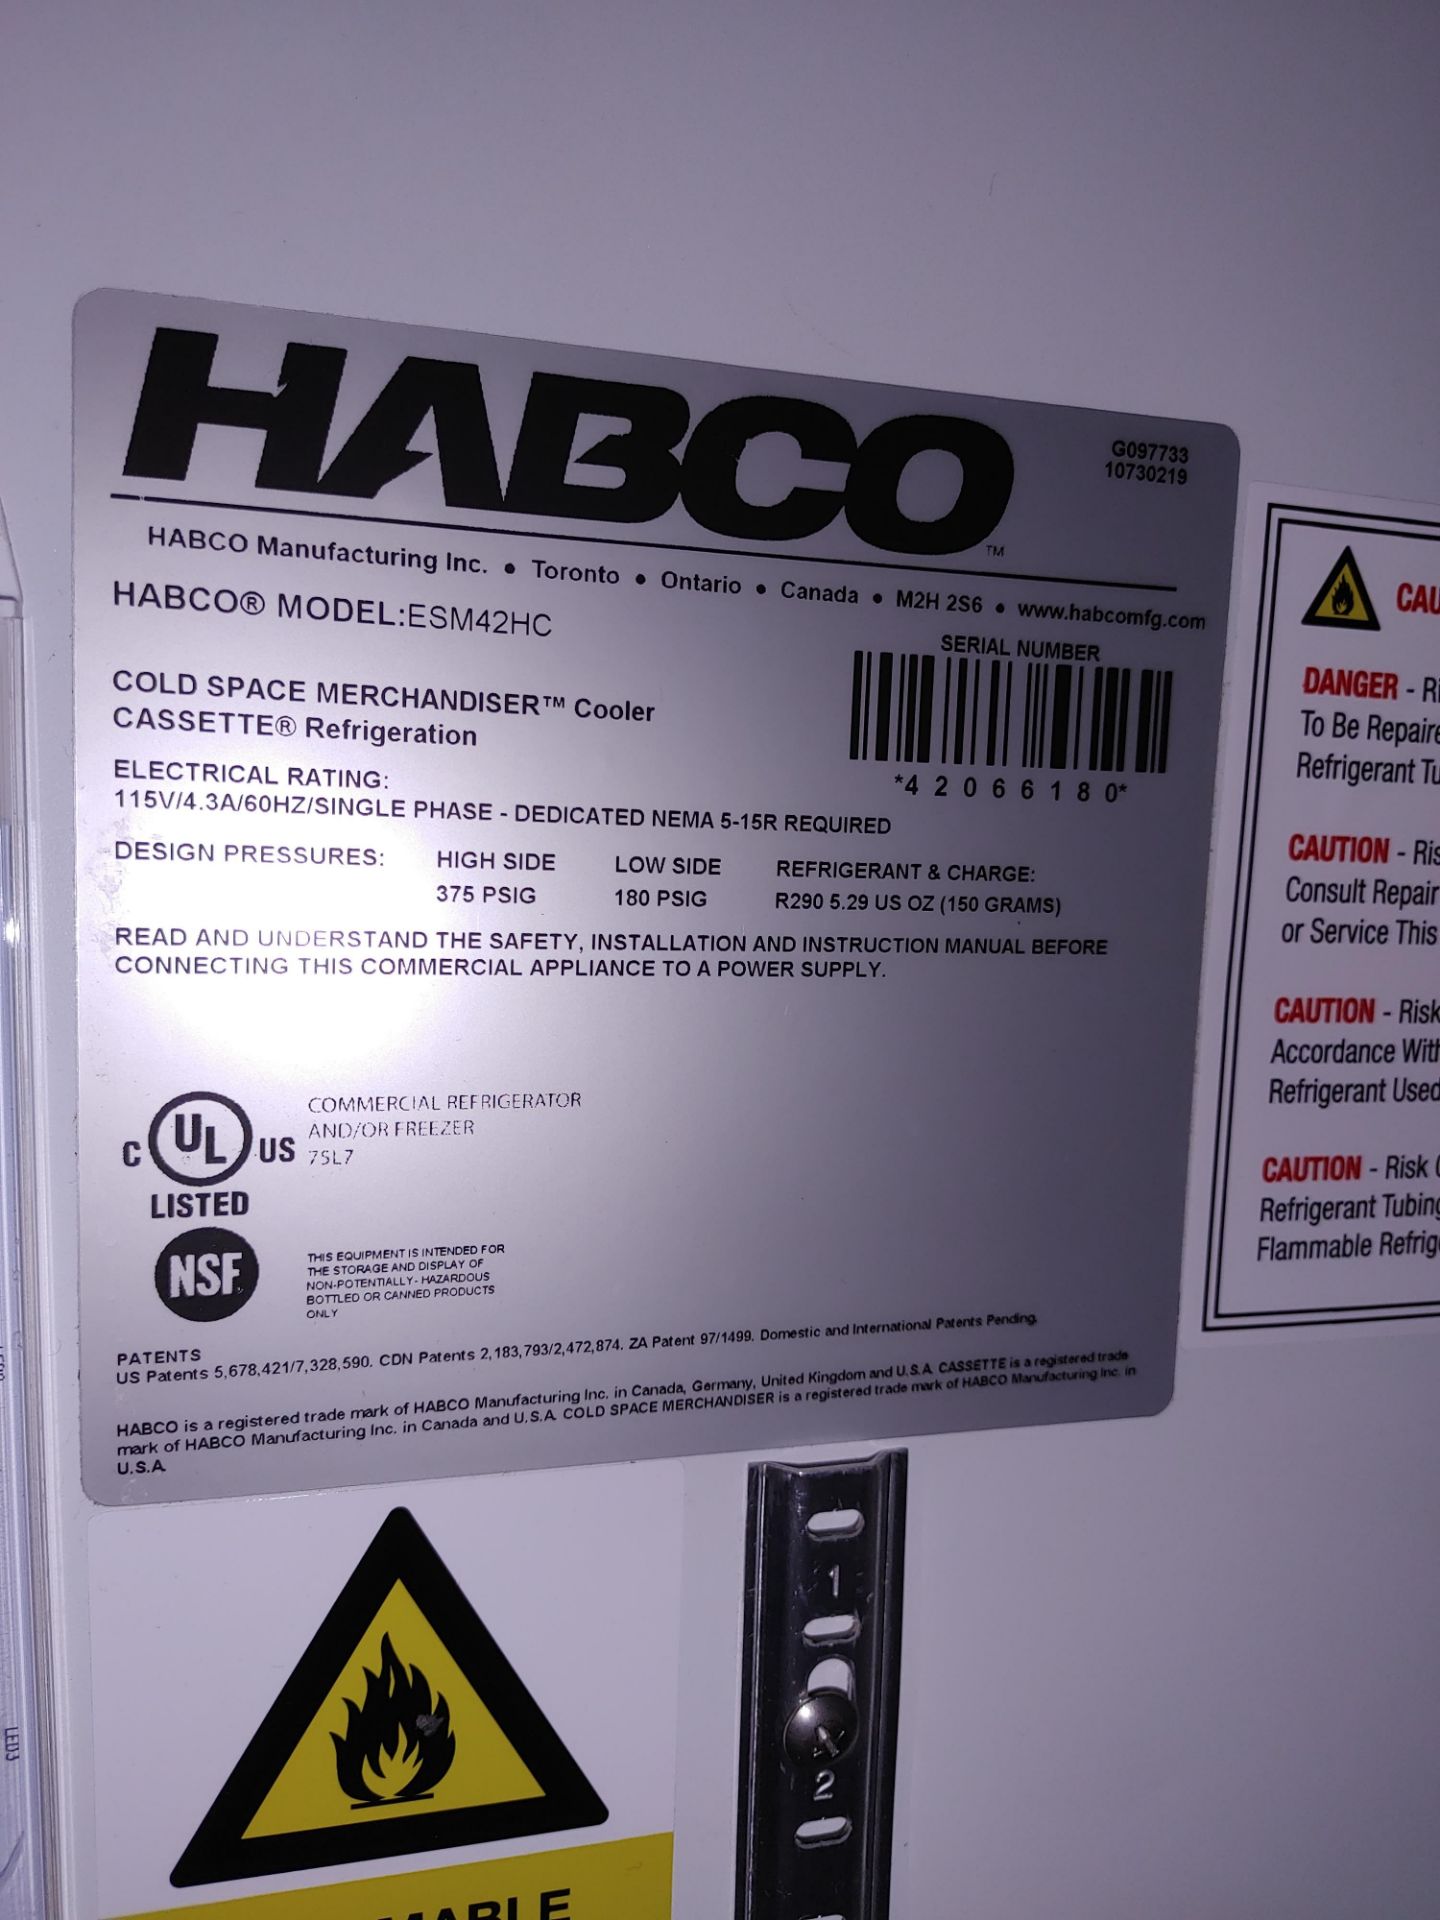 Habco "ESM42HC" 2 Door Glass Front Refrigerator S/N 420662180 - Image 2 of 2